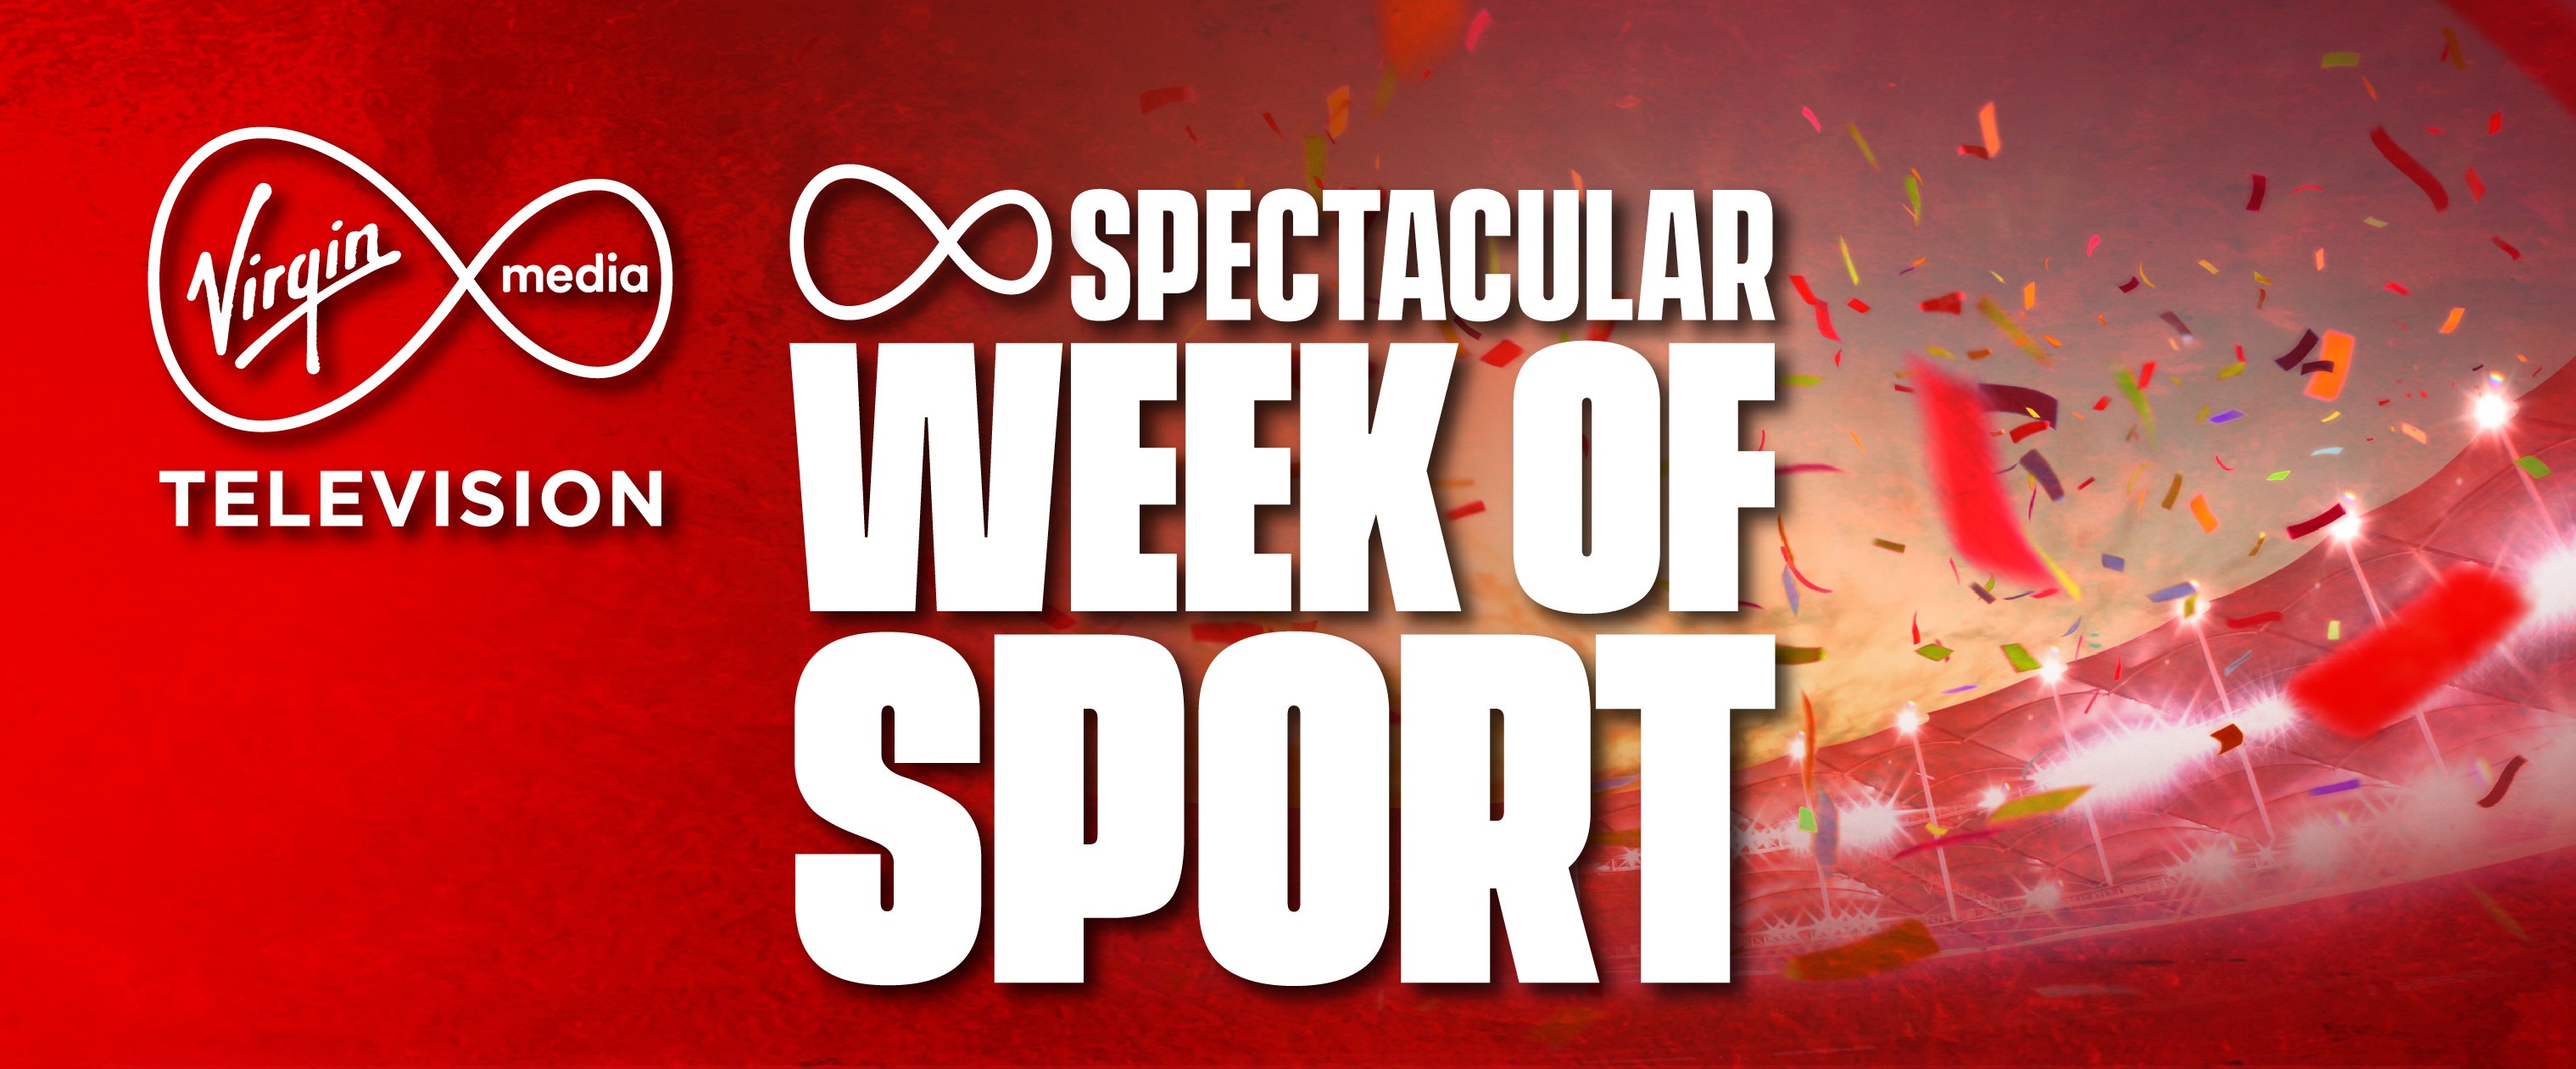 Spectacular Week of Sport